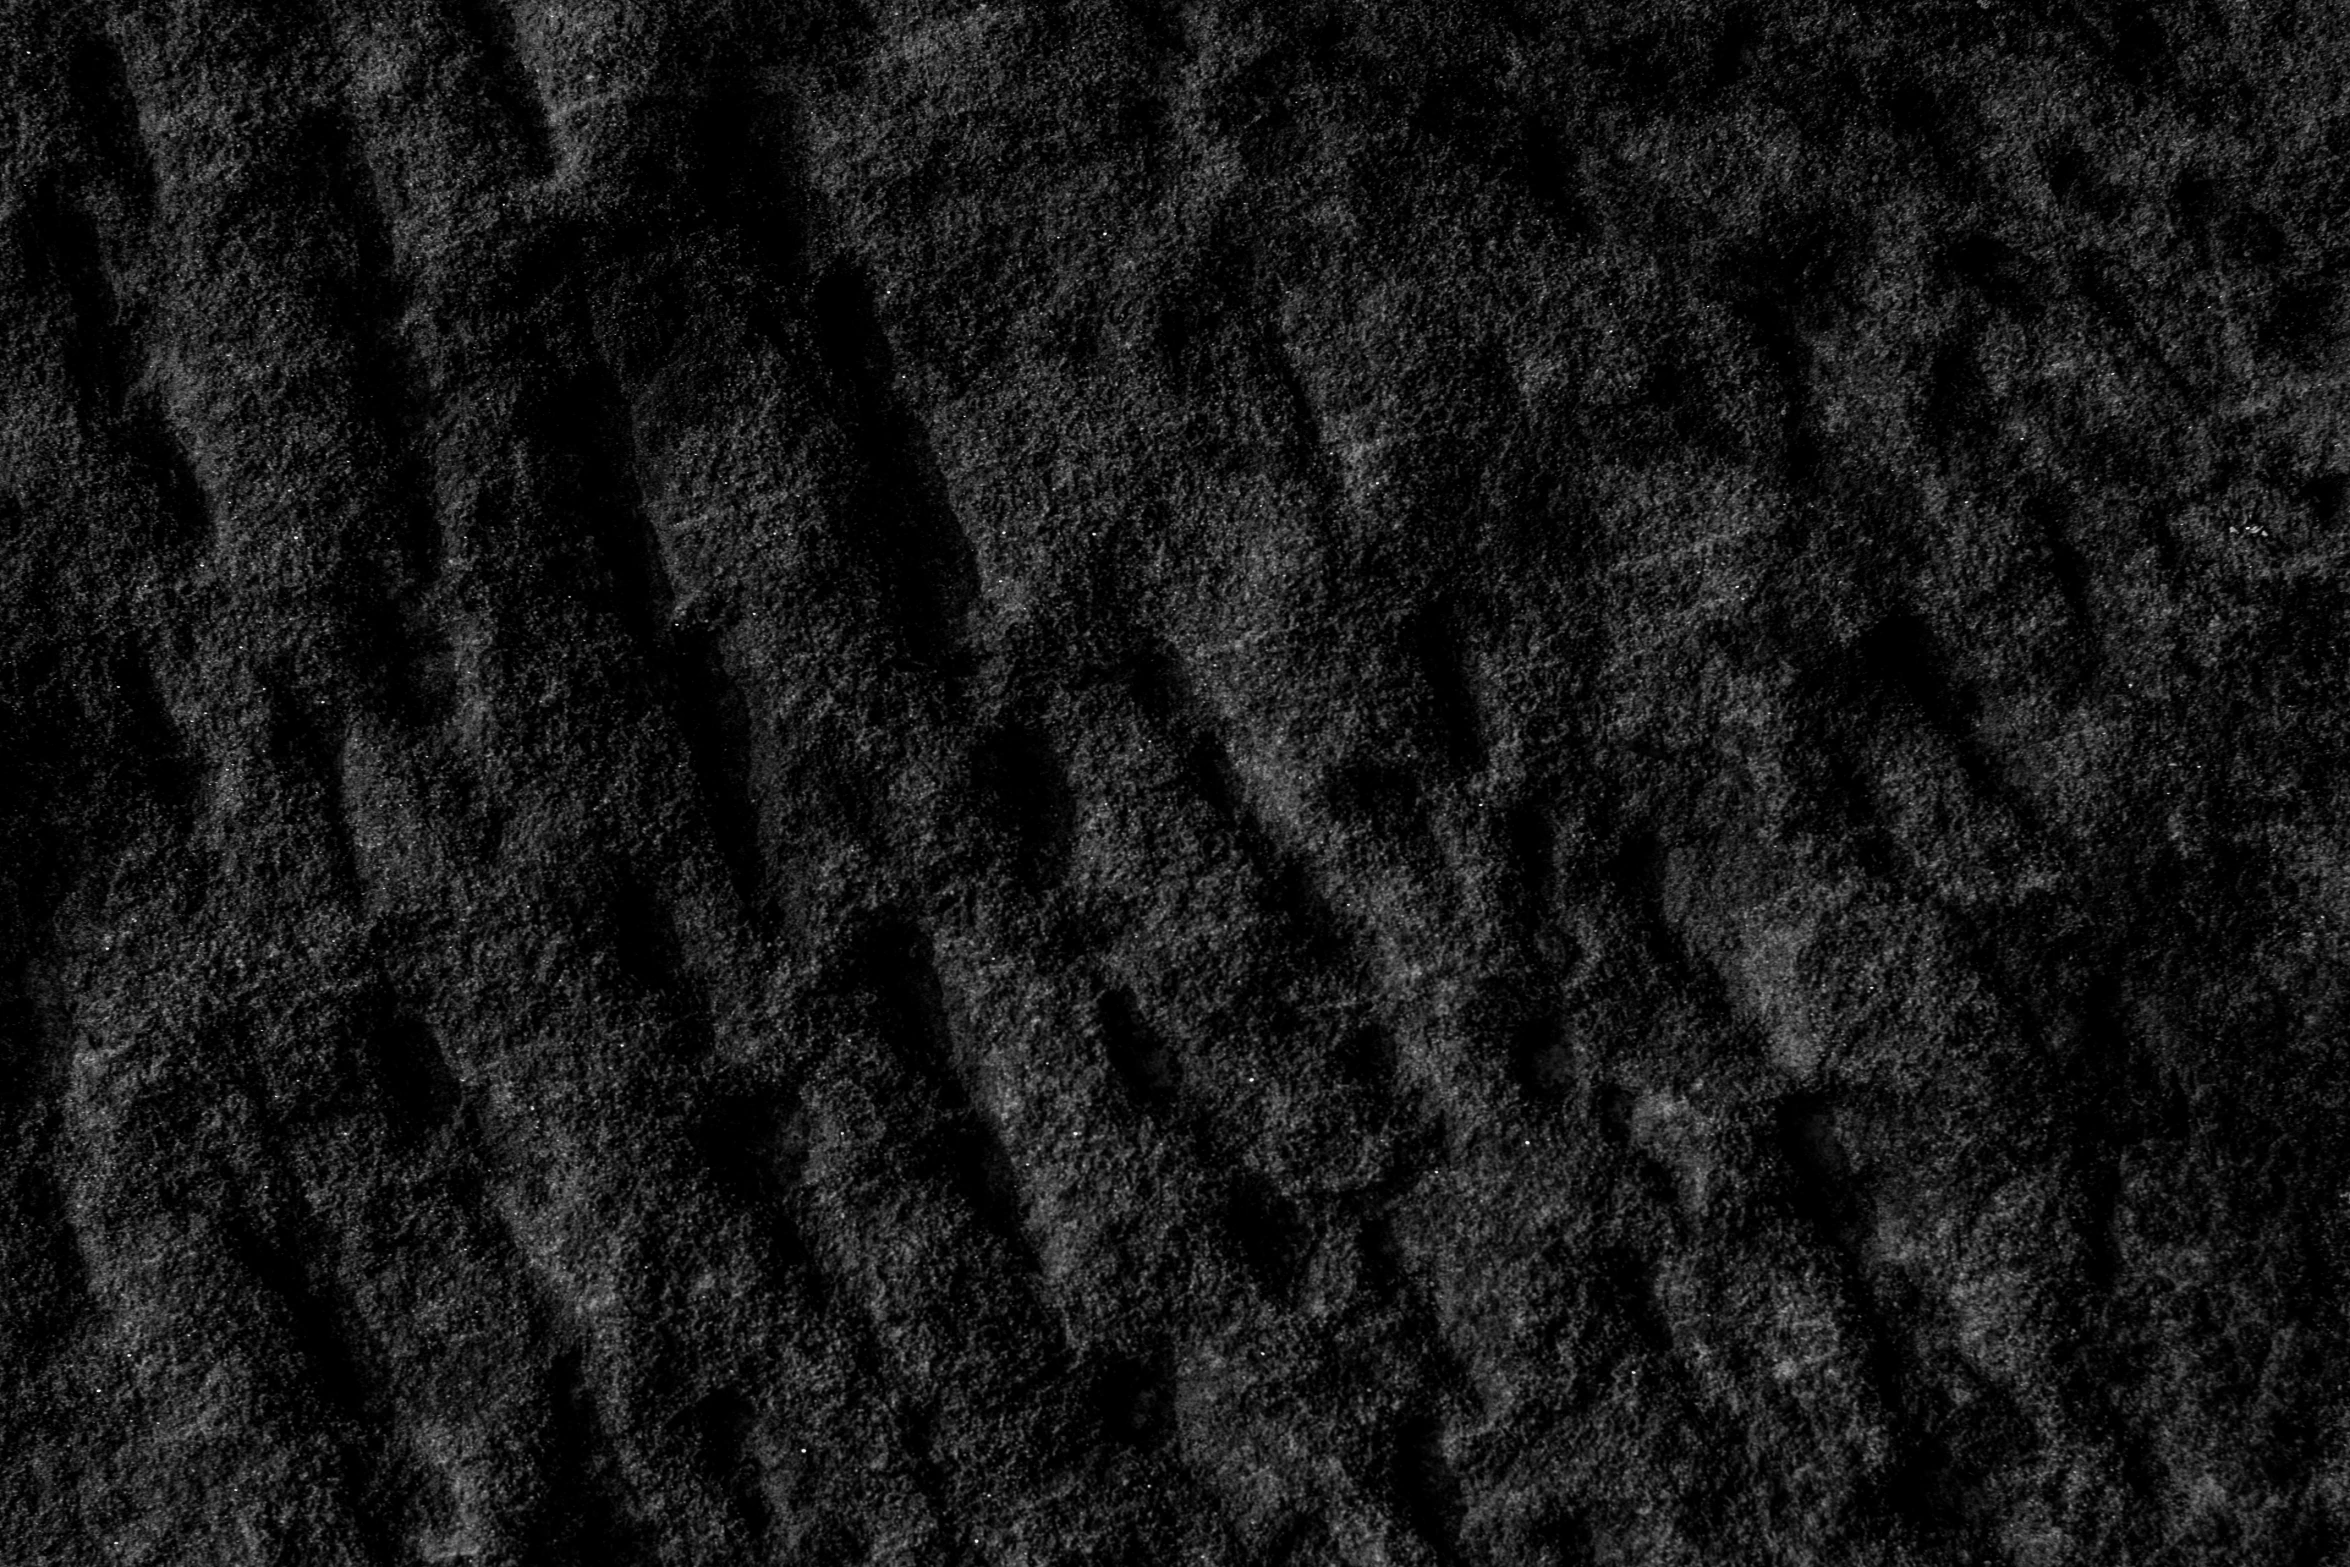 a black po of rough lines on a plain